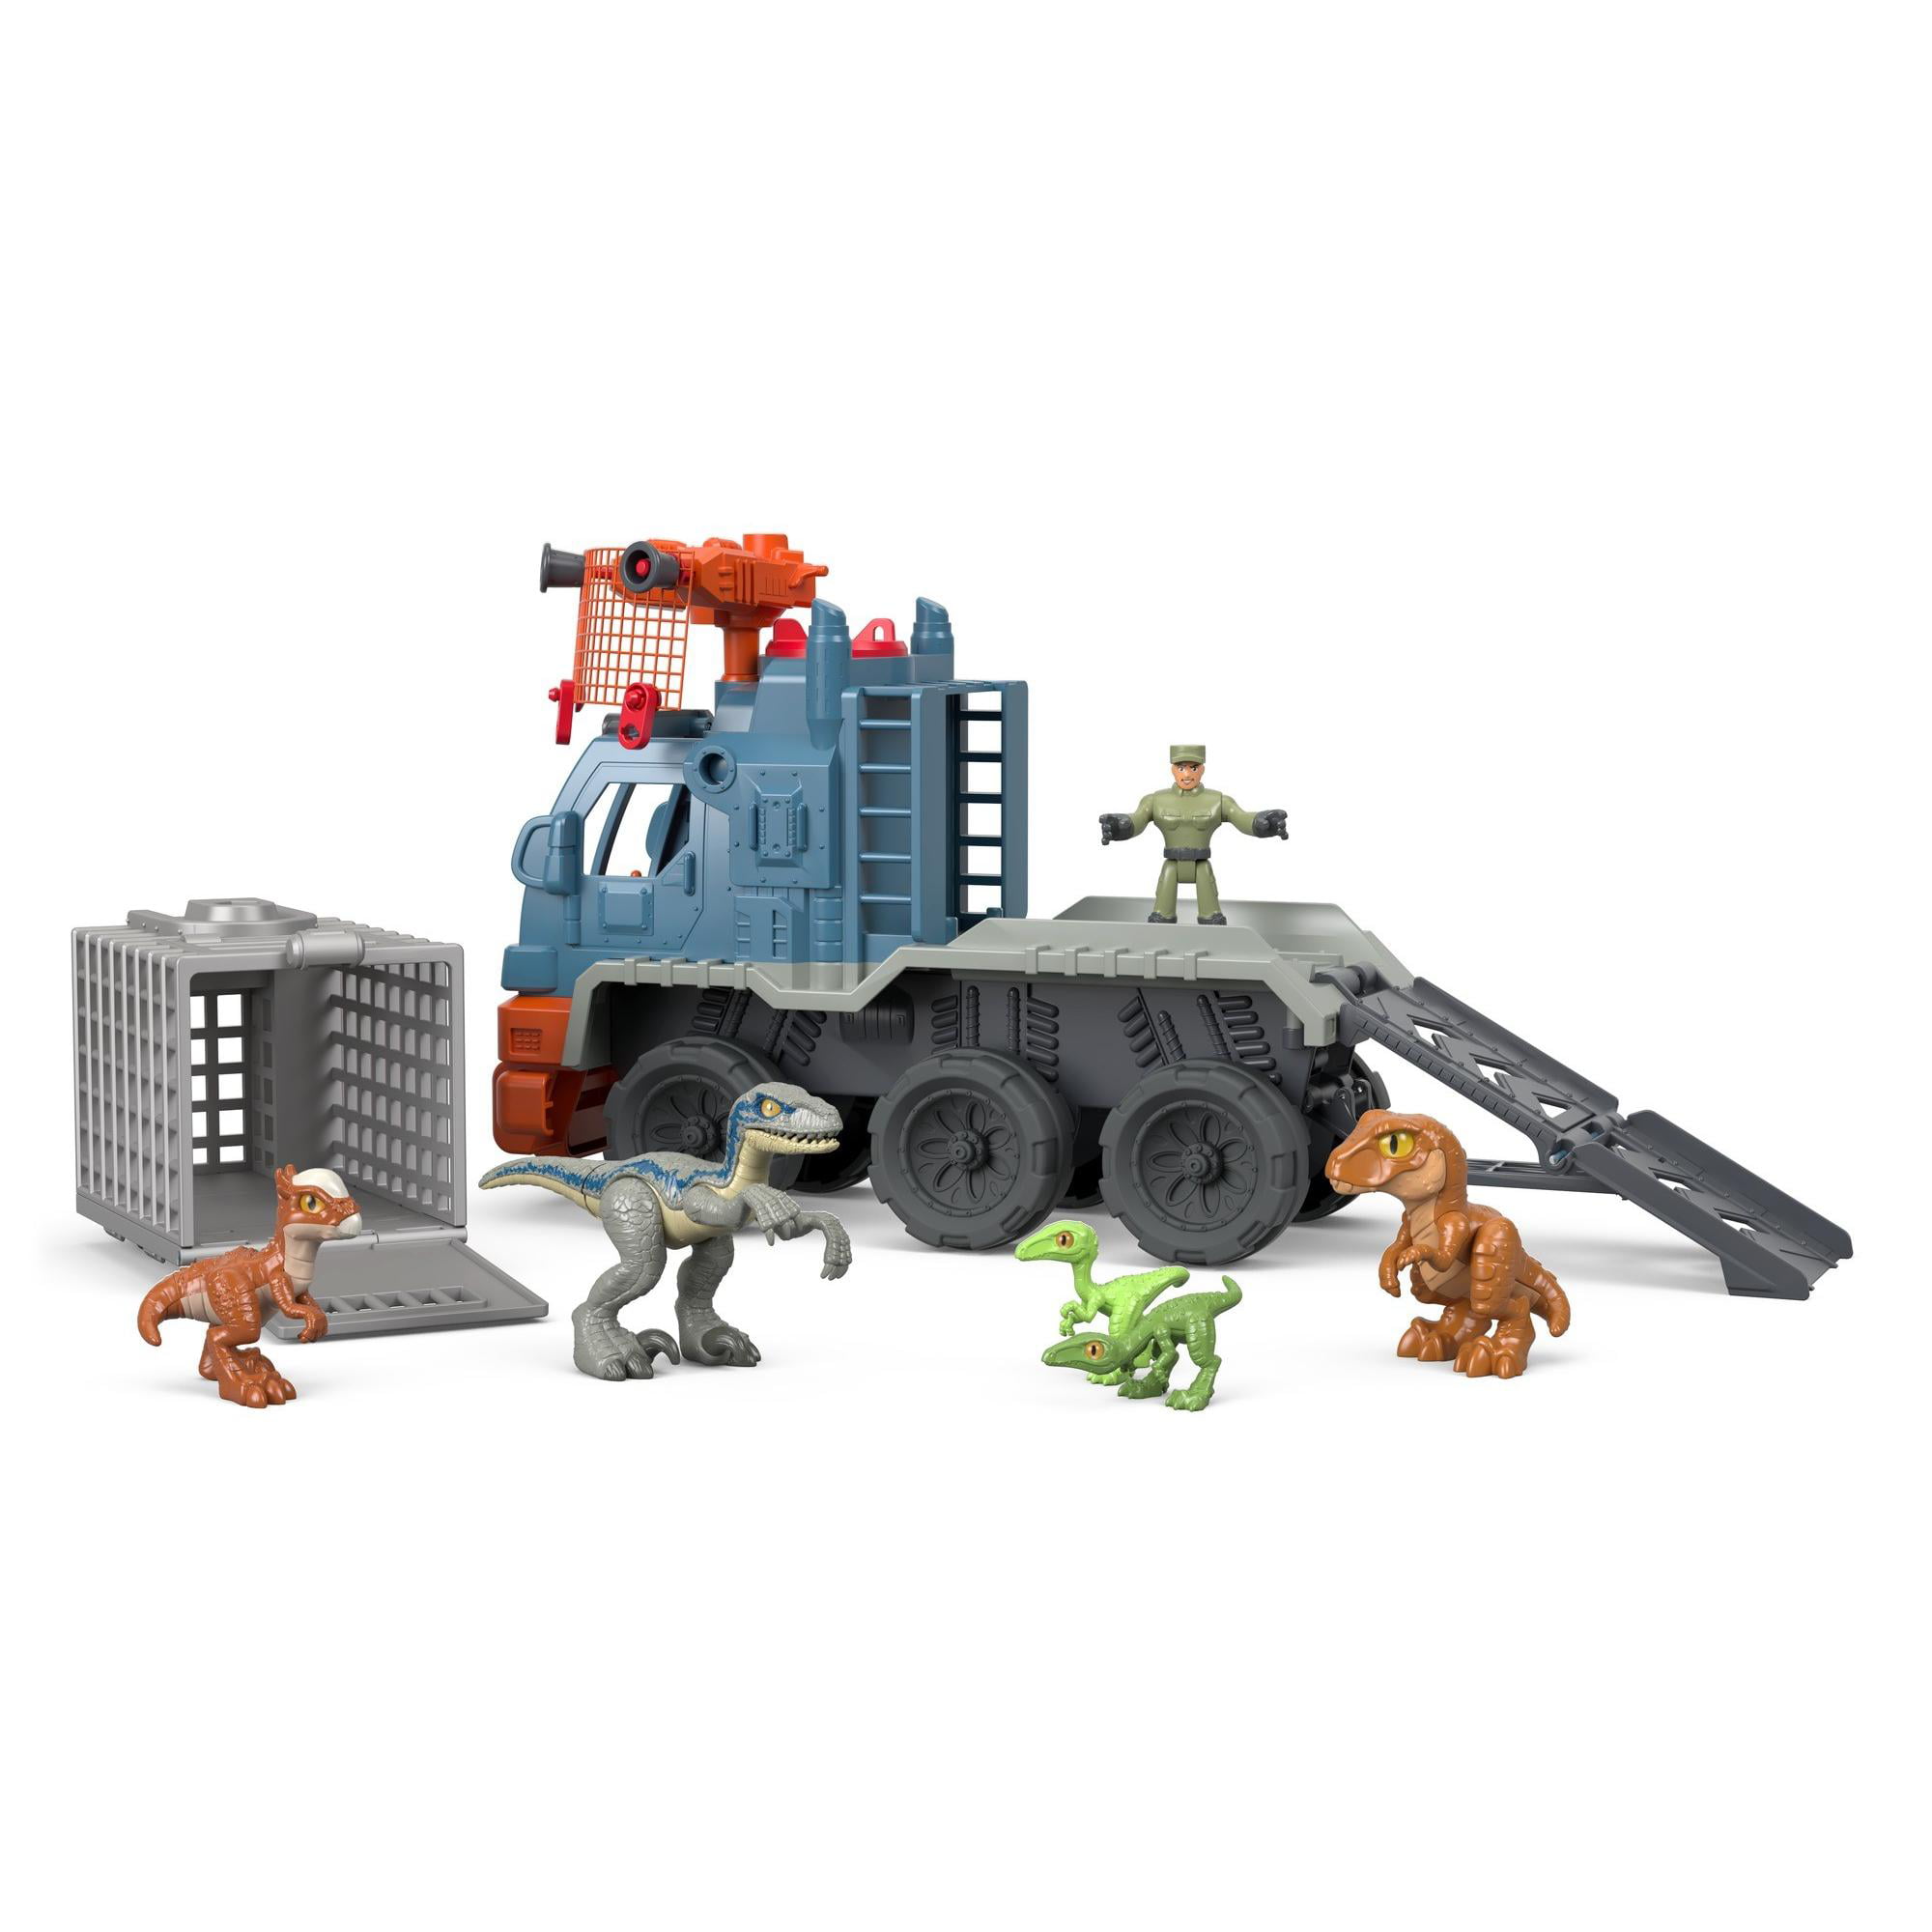 Imaginext Jurassic World Dinosaur Hauler Toy Gift Set Park FREE SHIPPING 